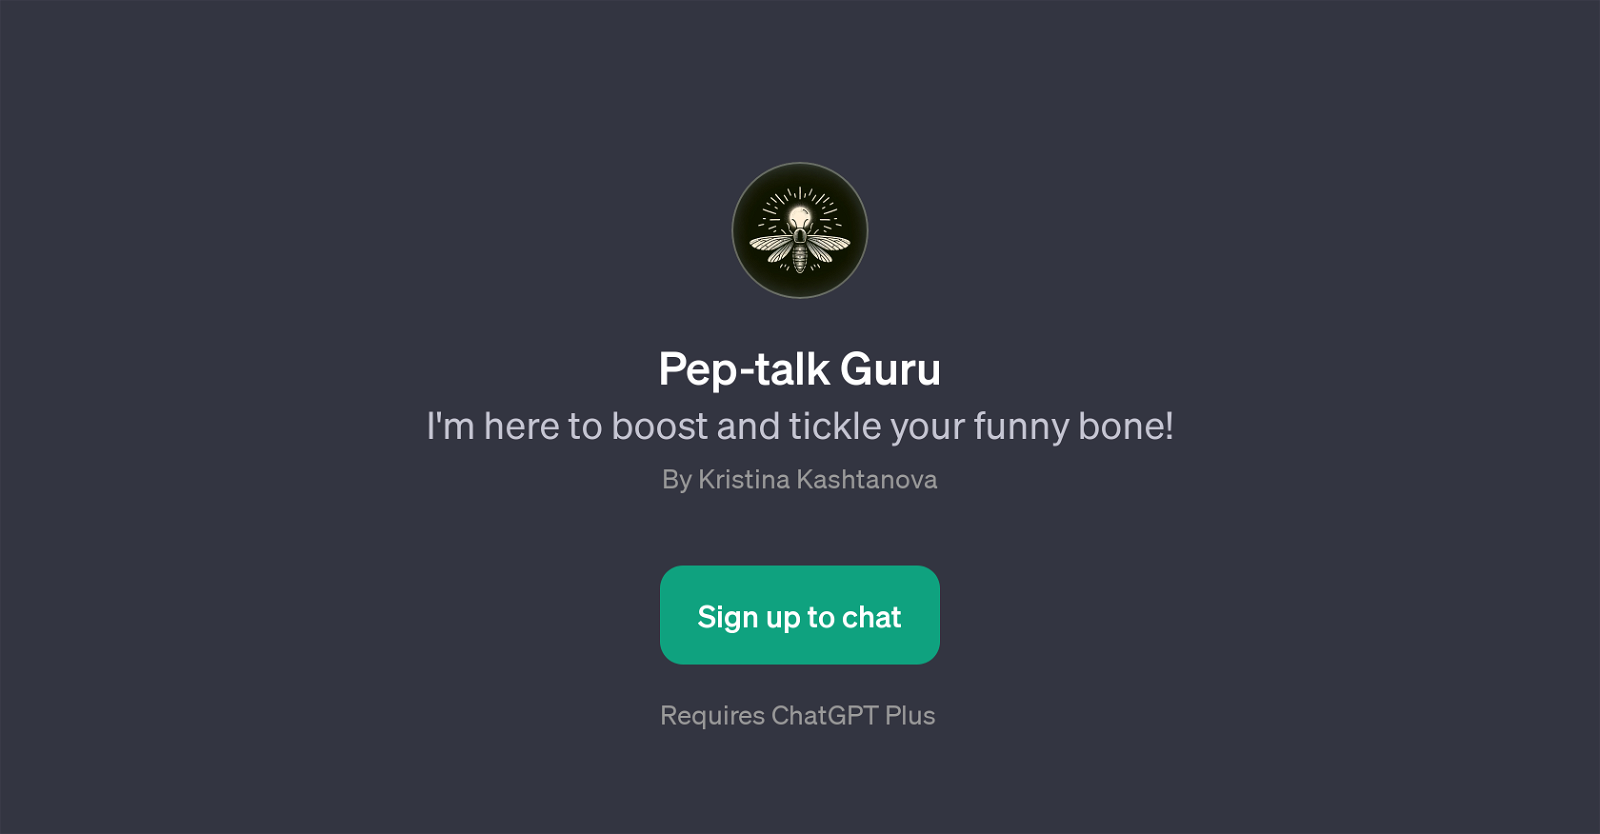 Pep-talk Guru website